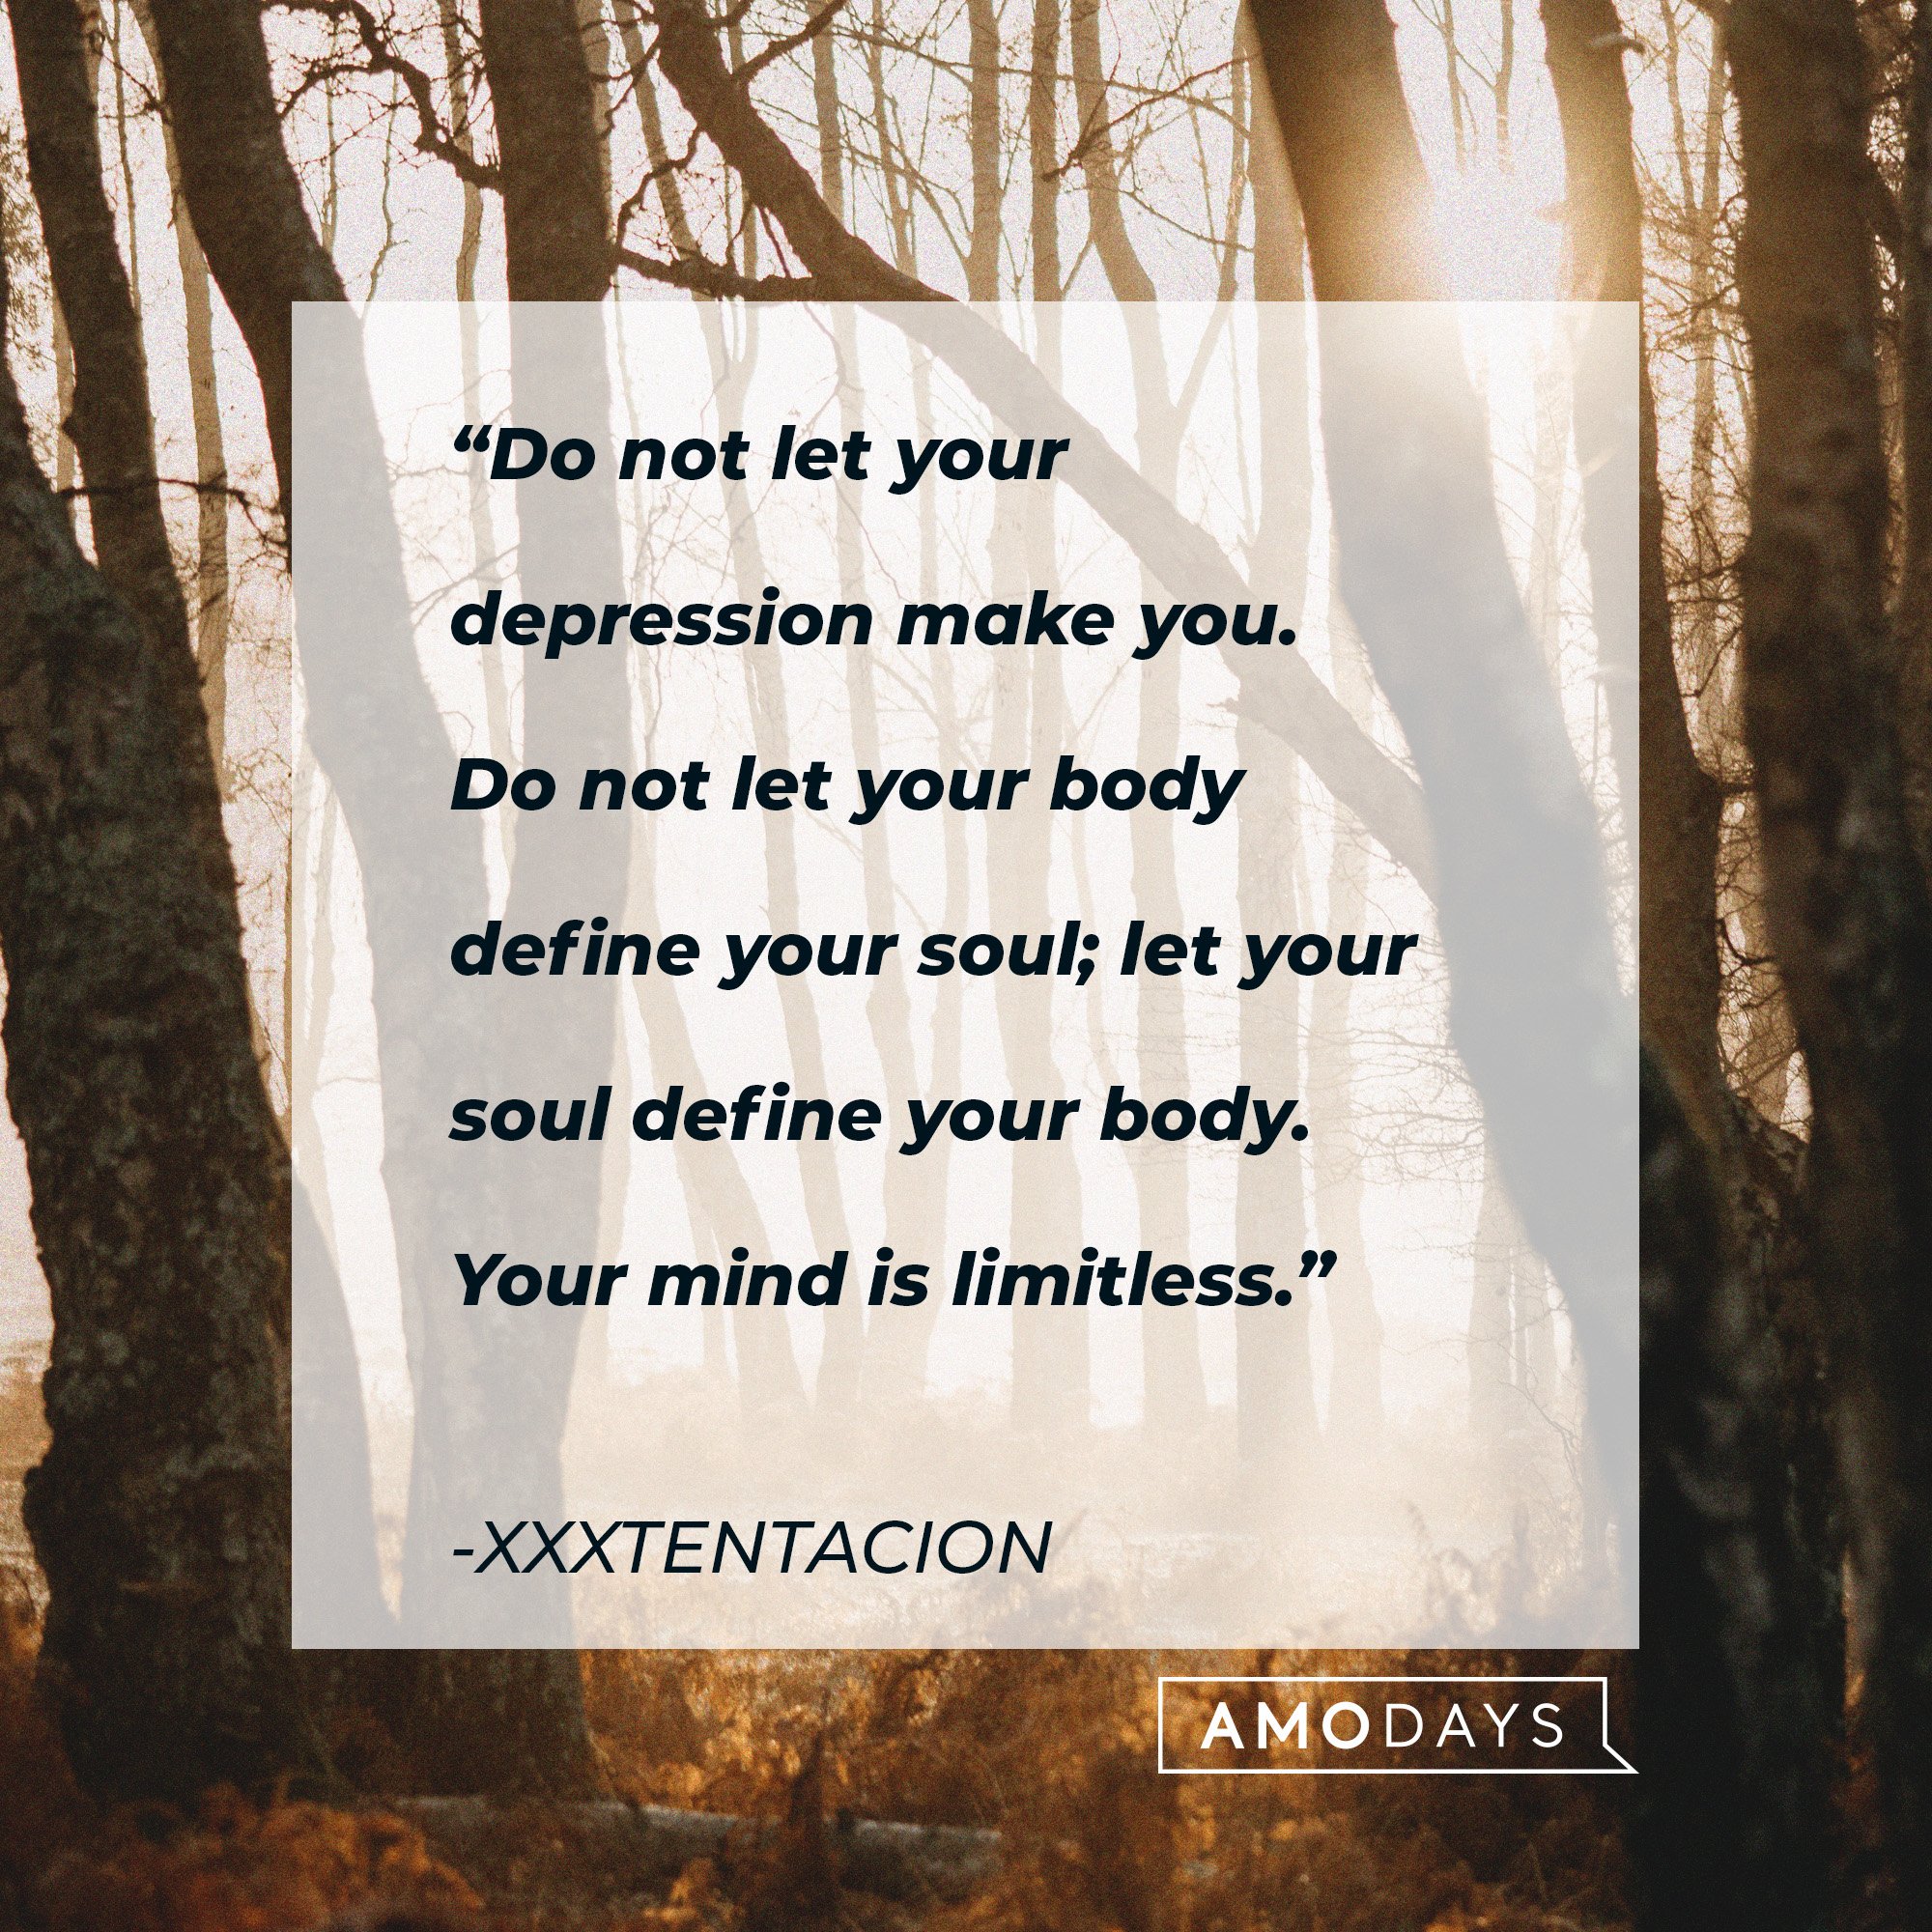 Xxxtentacion’s quote: “Do not let your depression make you. Do not let your body define your soul; let your soul define your body. Your mind is limitless.” | Image: AmoDays